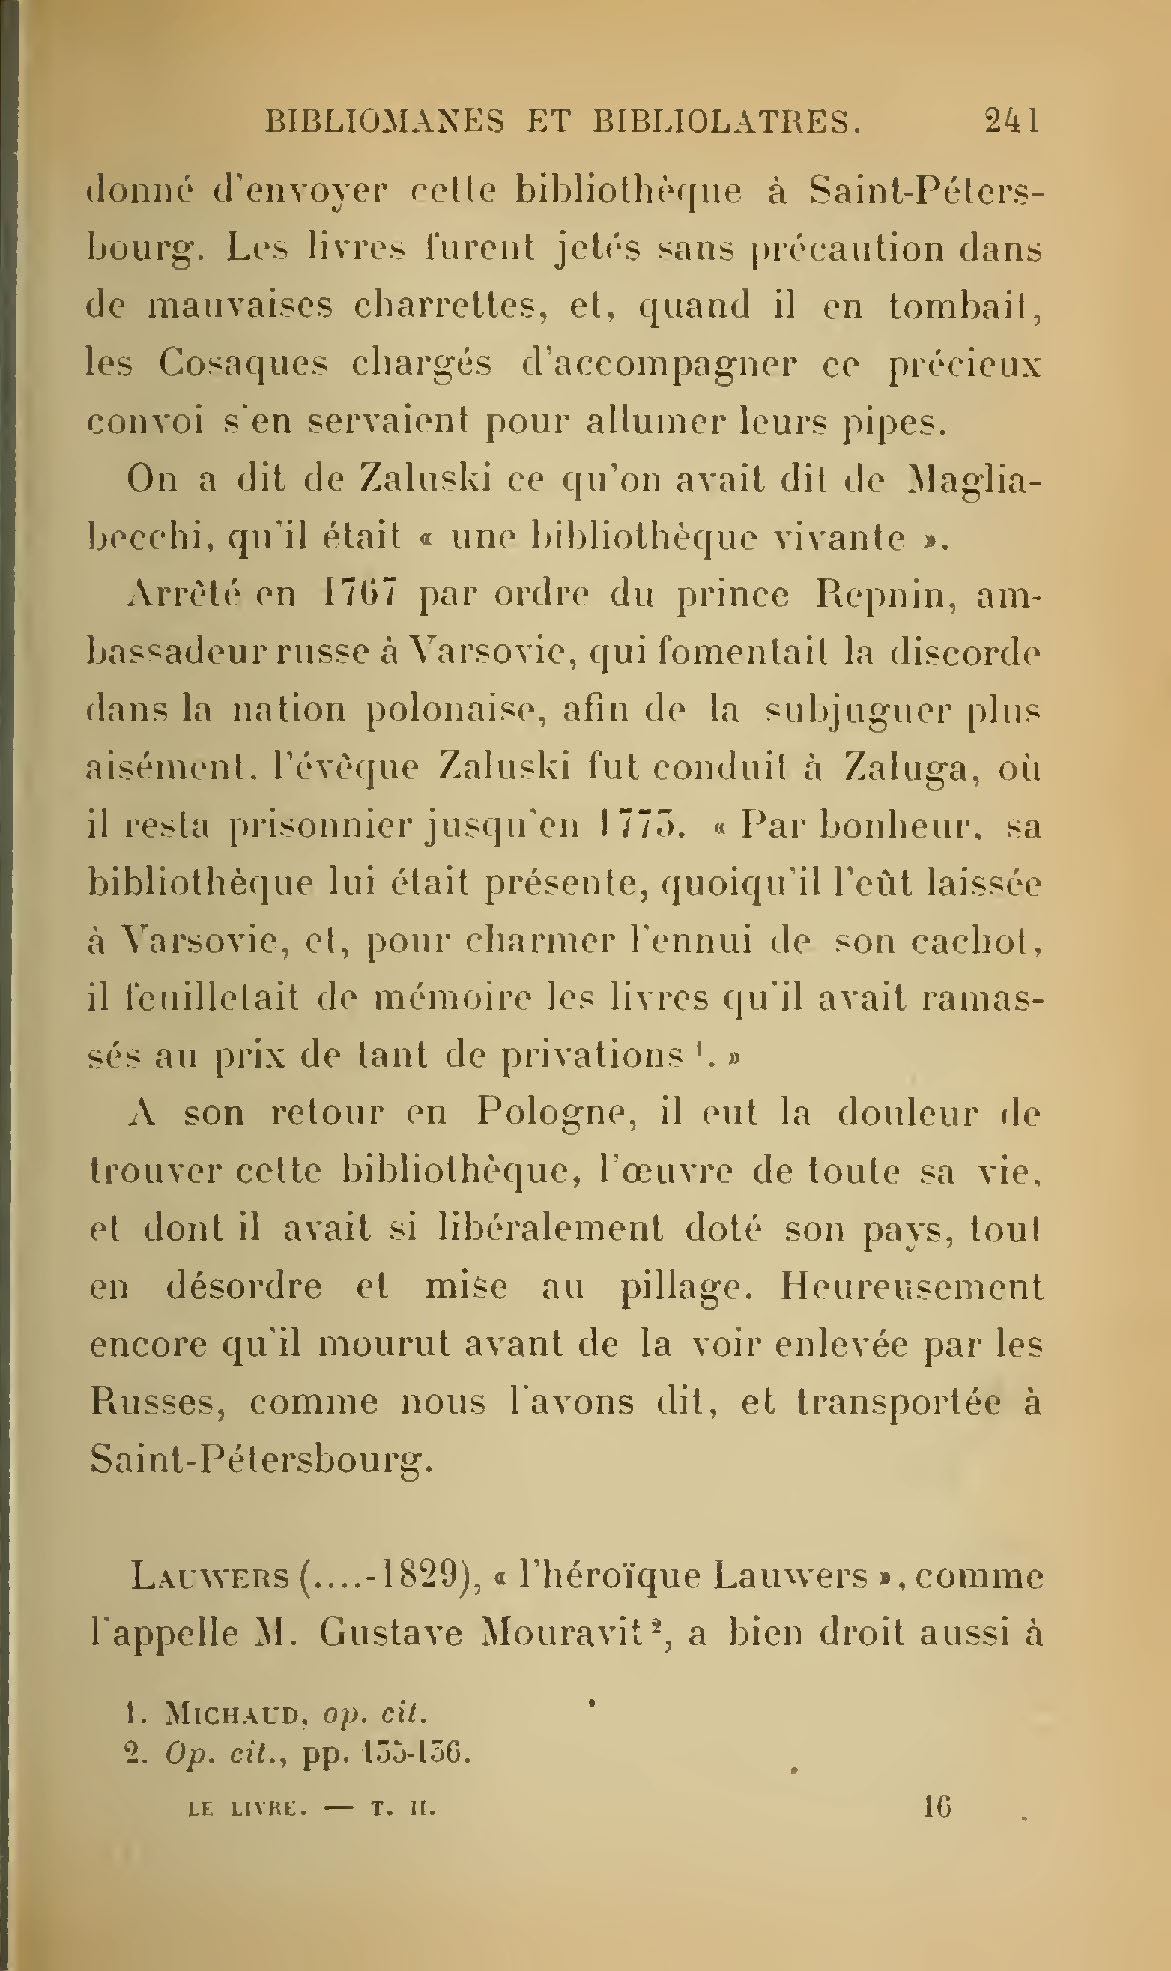 Albert Cim, Le Livre, t. II, p. 241.